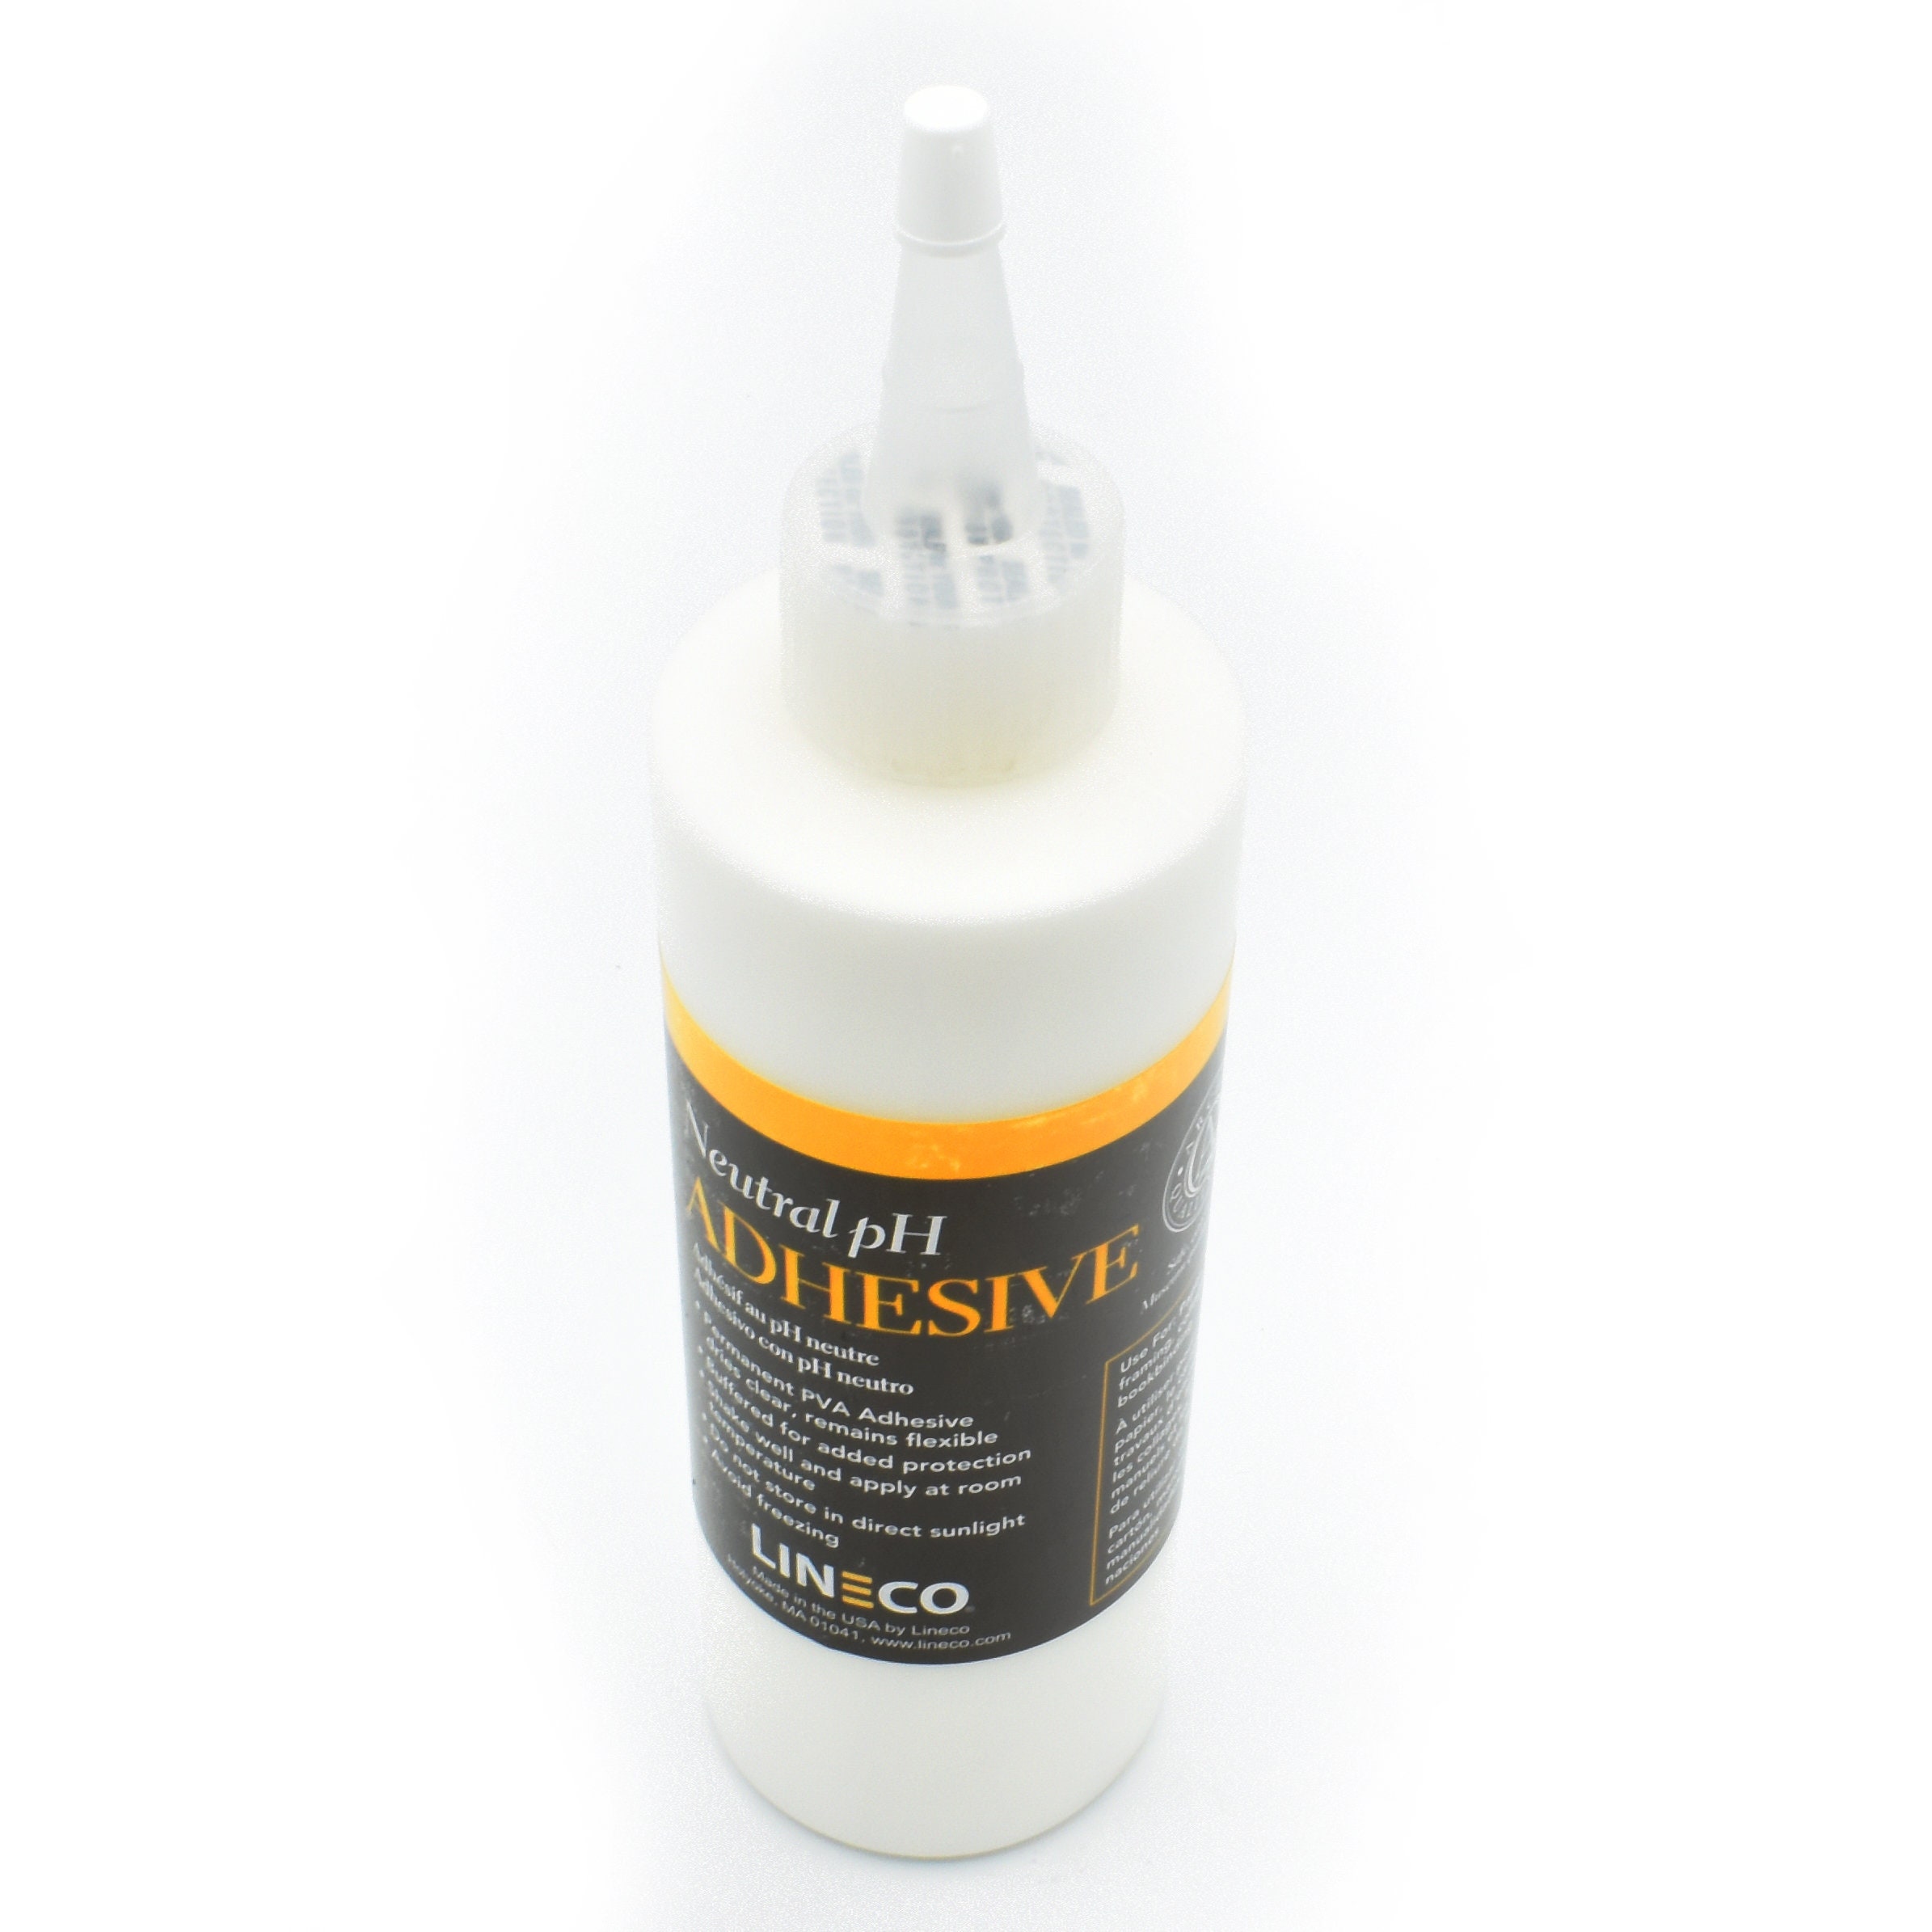 Hi-tack PVA Adhesive / Stiffener Glue Perfect for for Millinery